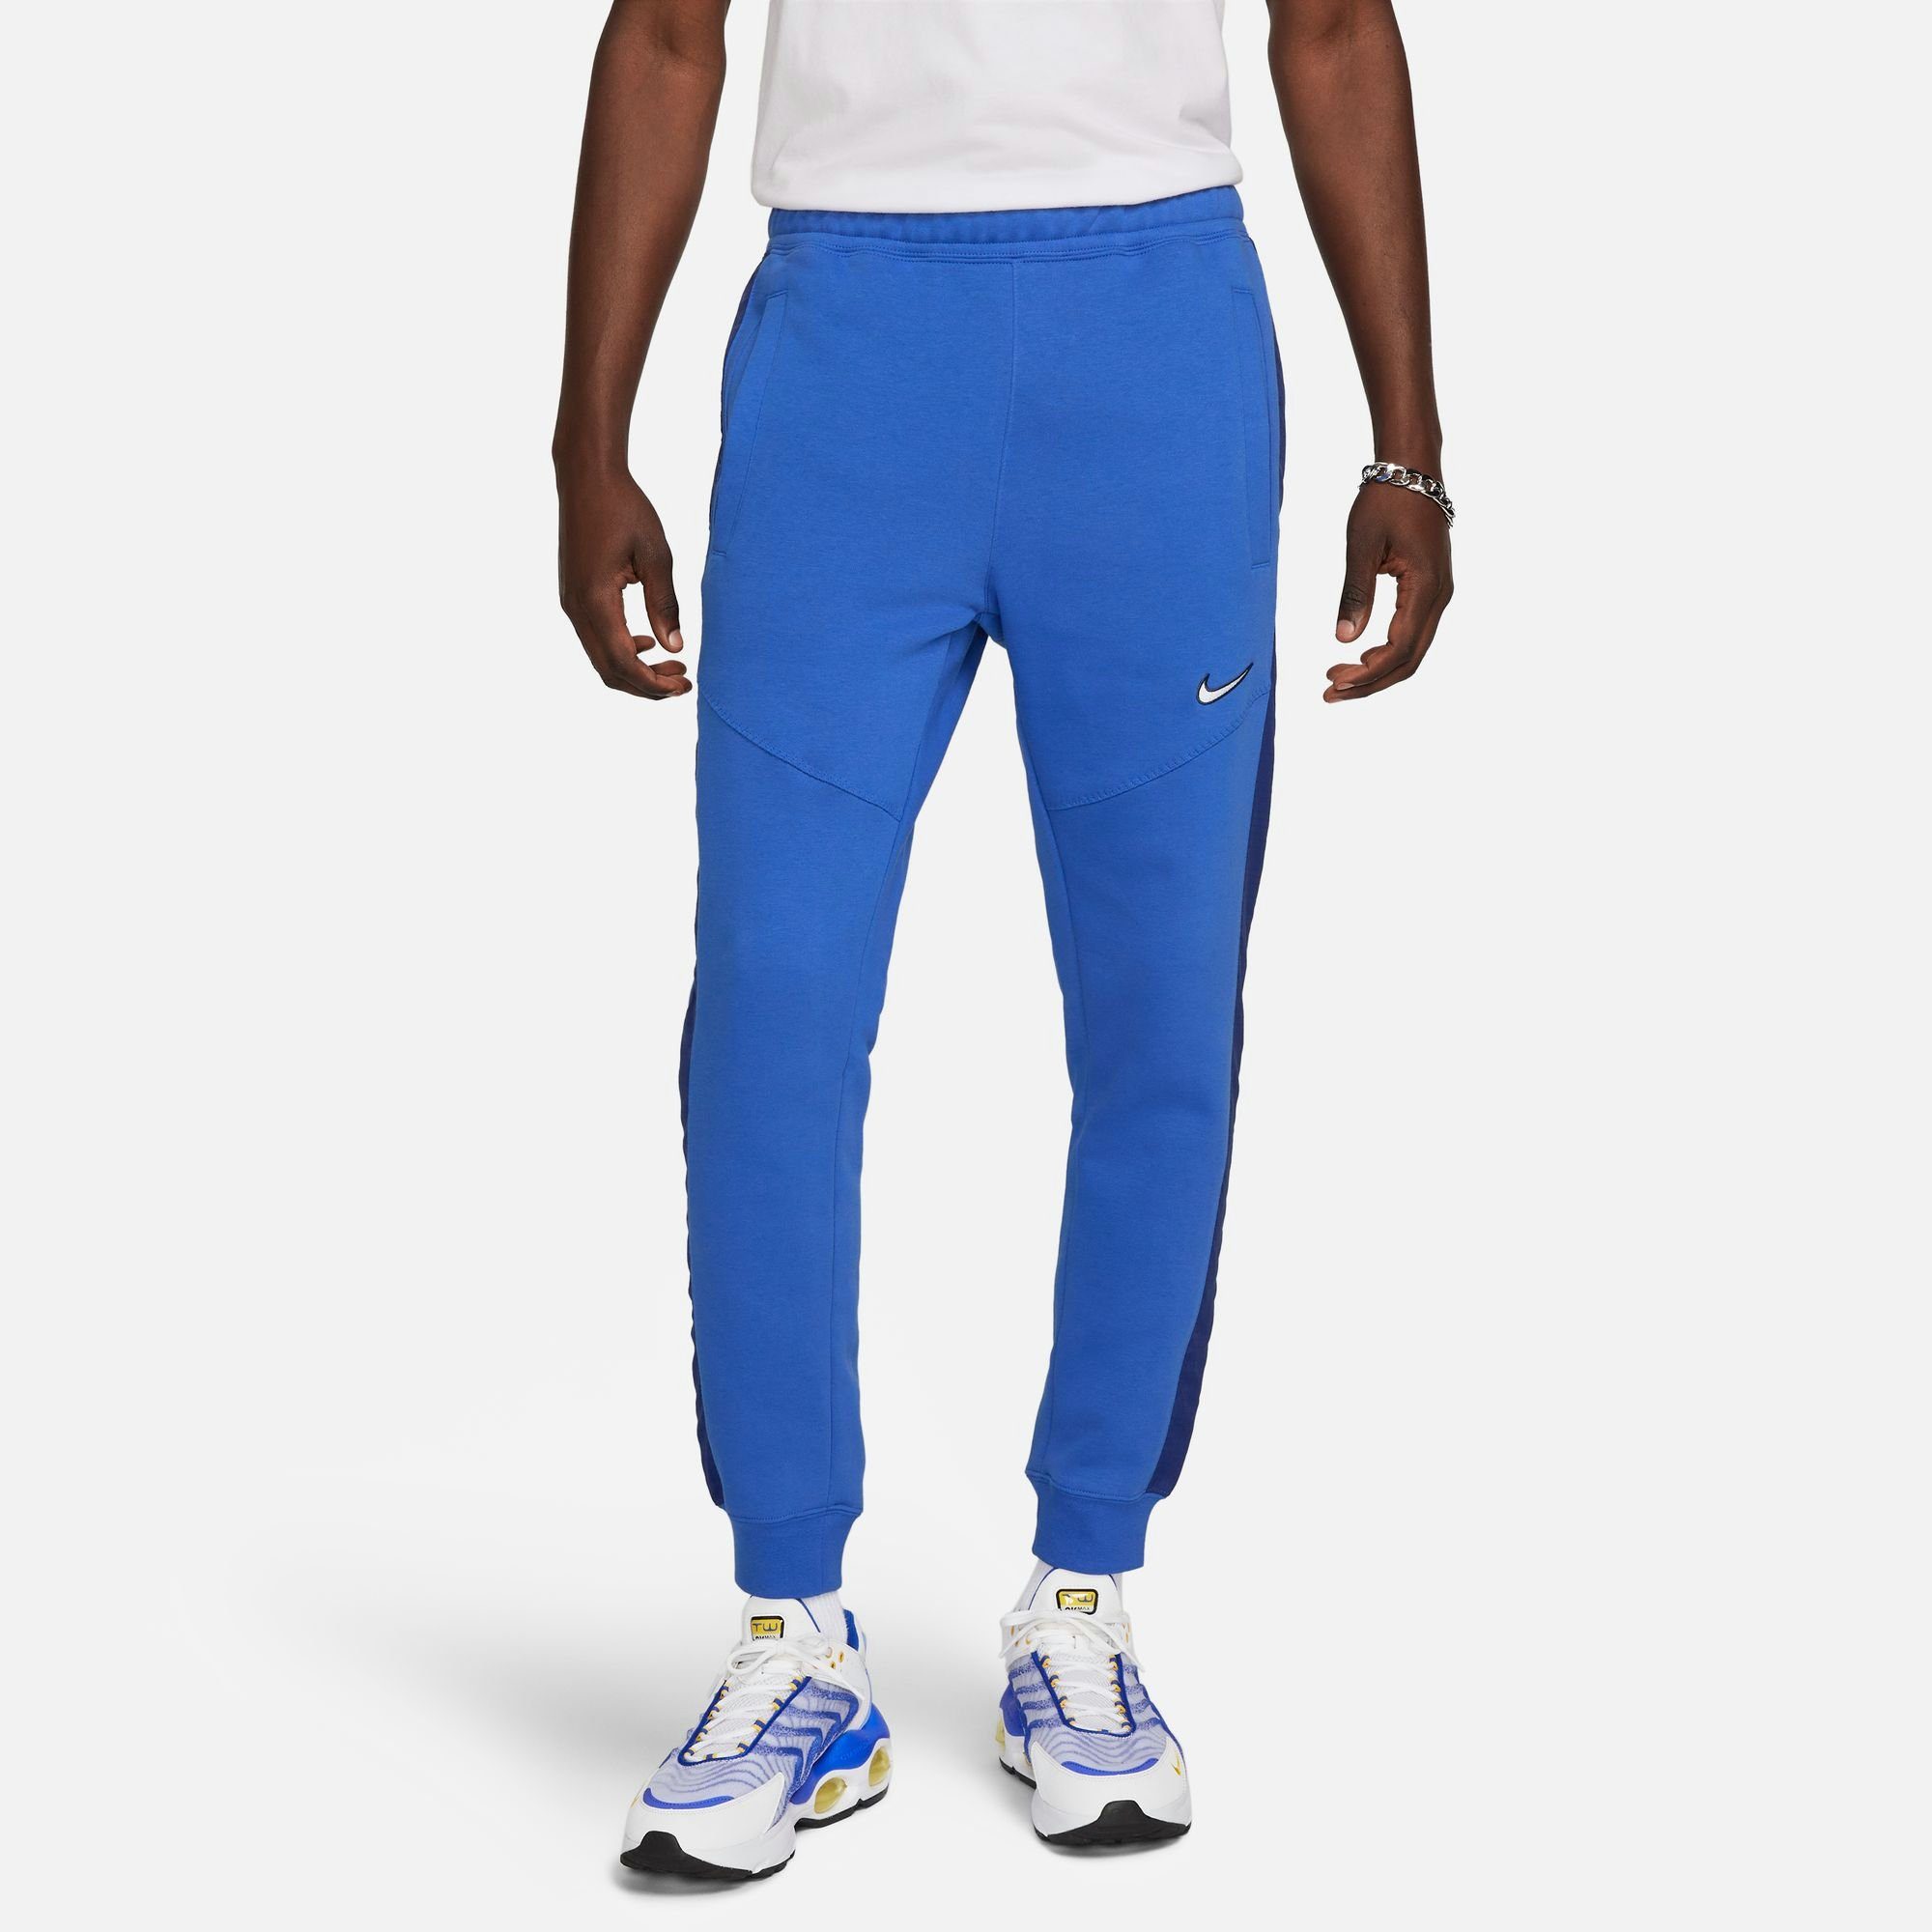 NSW M GAME Nike BB ROYAL/DEEP ROYAL Jogginghose BLUE JOGGER SP Sportswear FLC